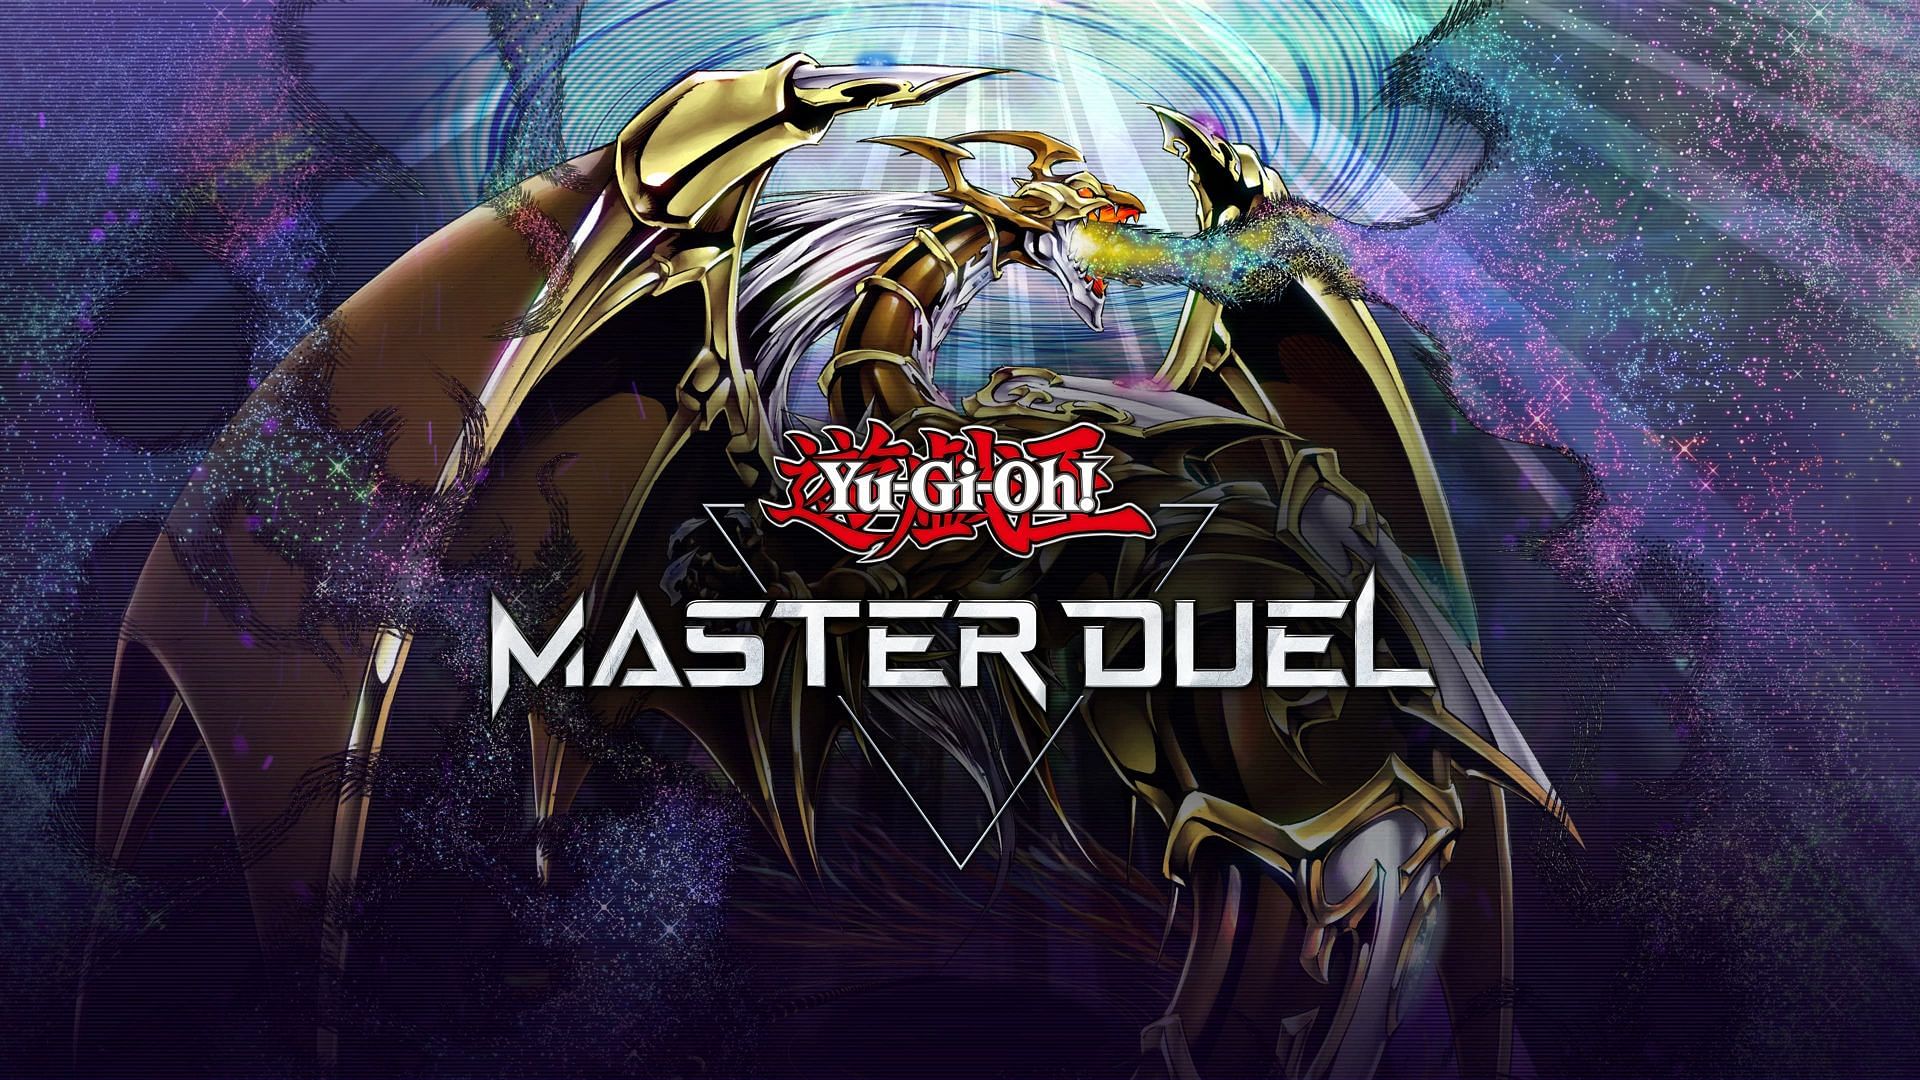 A promotional image for Yu-Gi-Oh! Master Duel (Image via Konami)